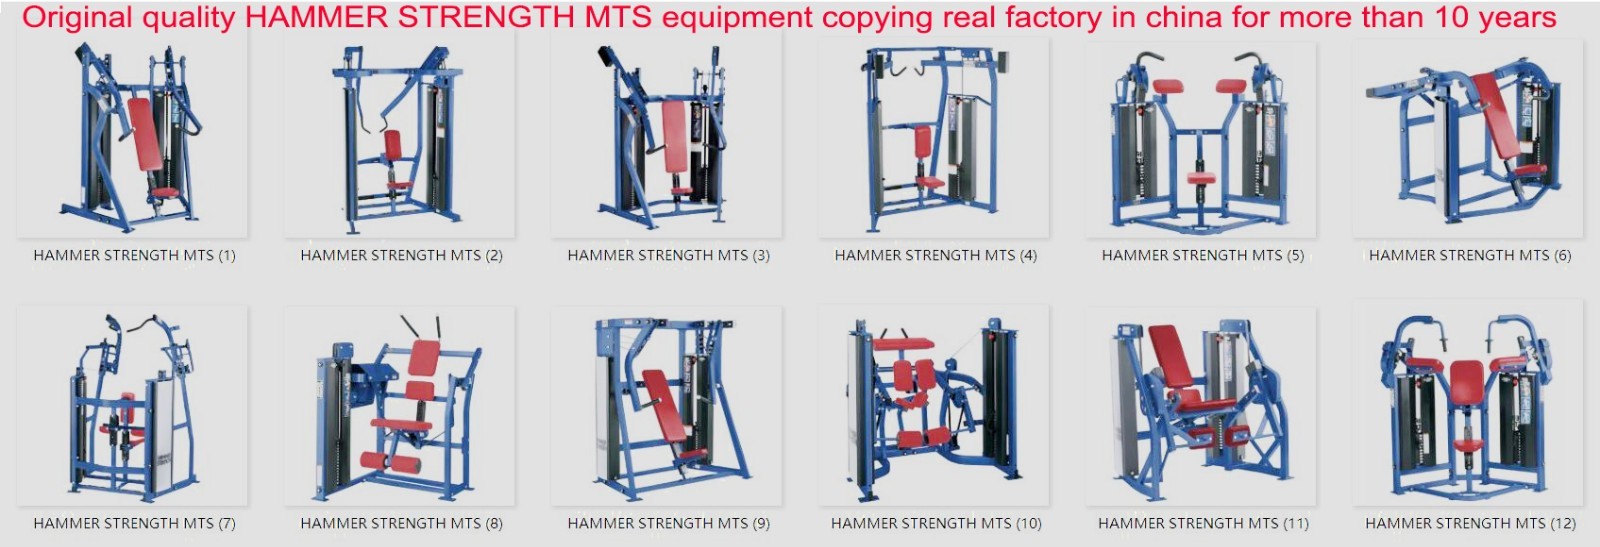 Hammer Strength-MTS